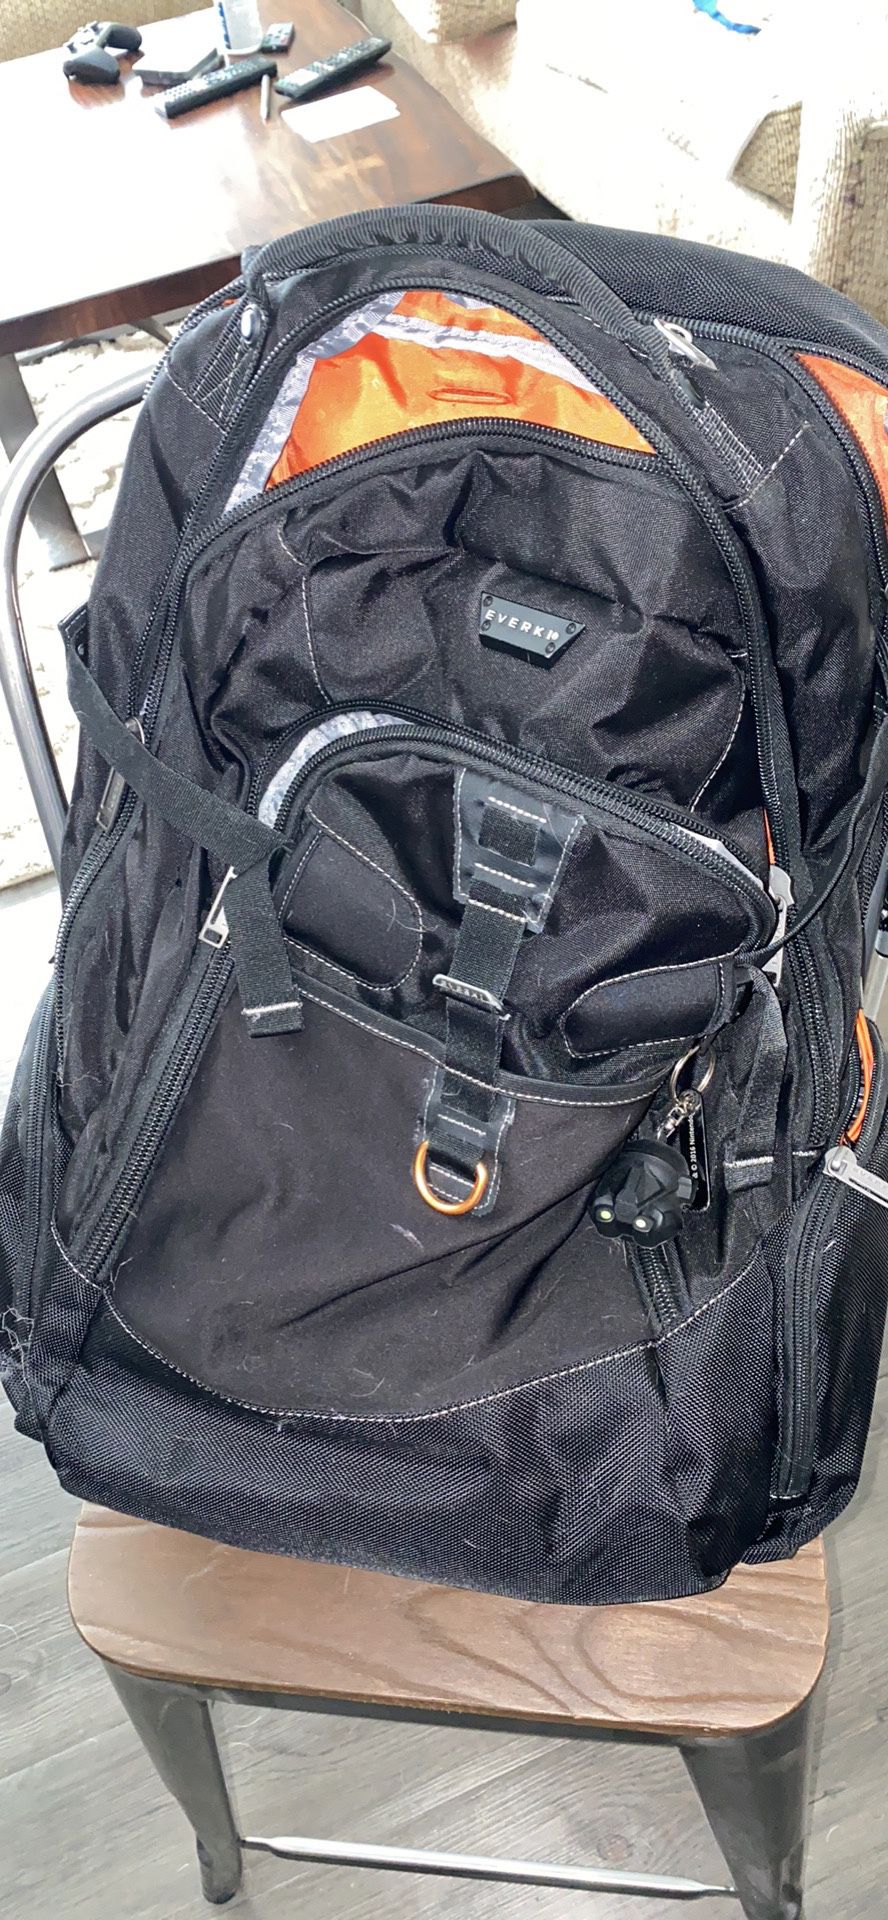 Everki 18.4” Gaming Laptop Backpack